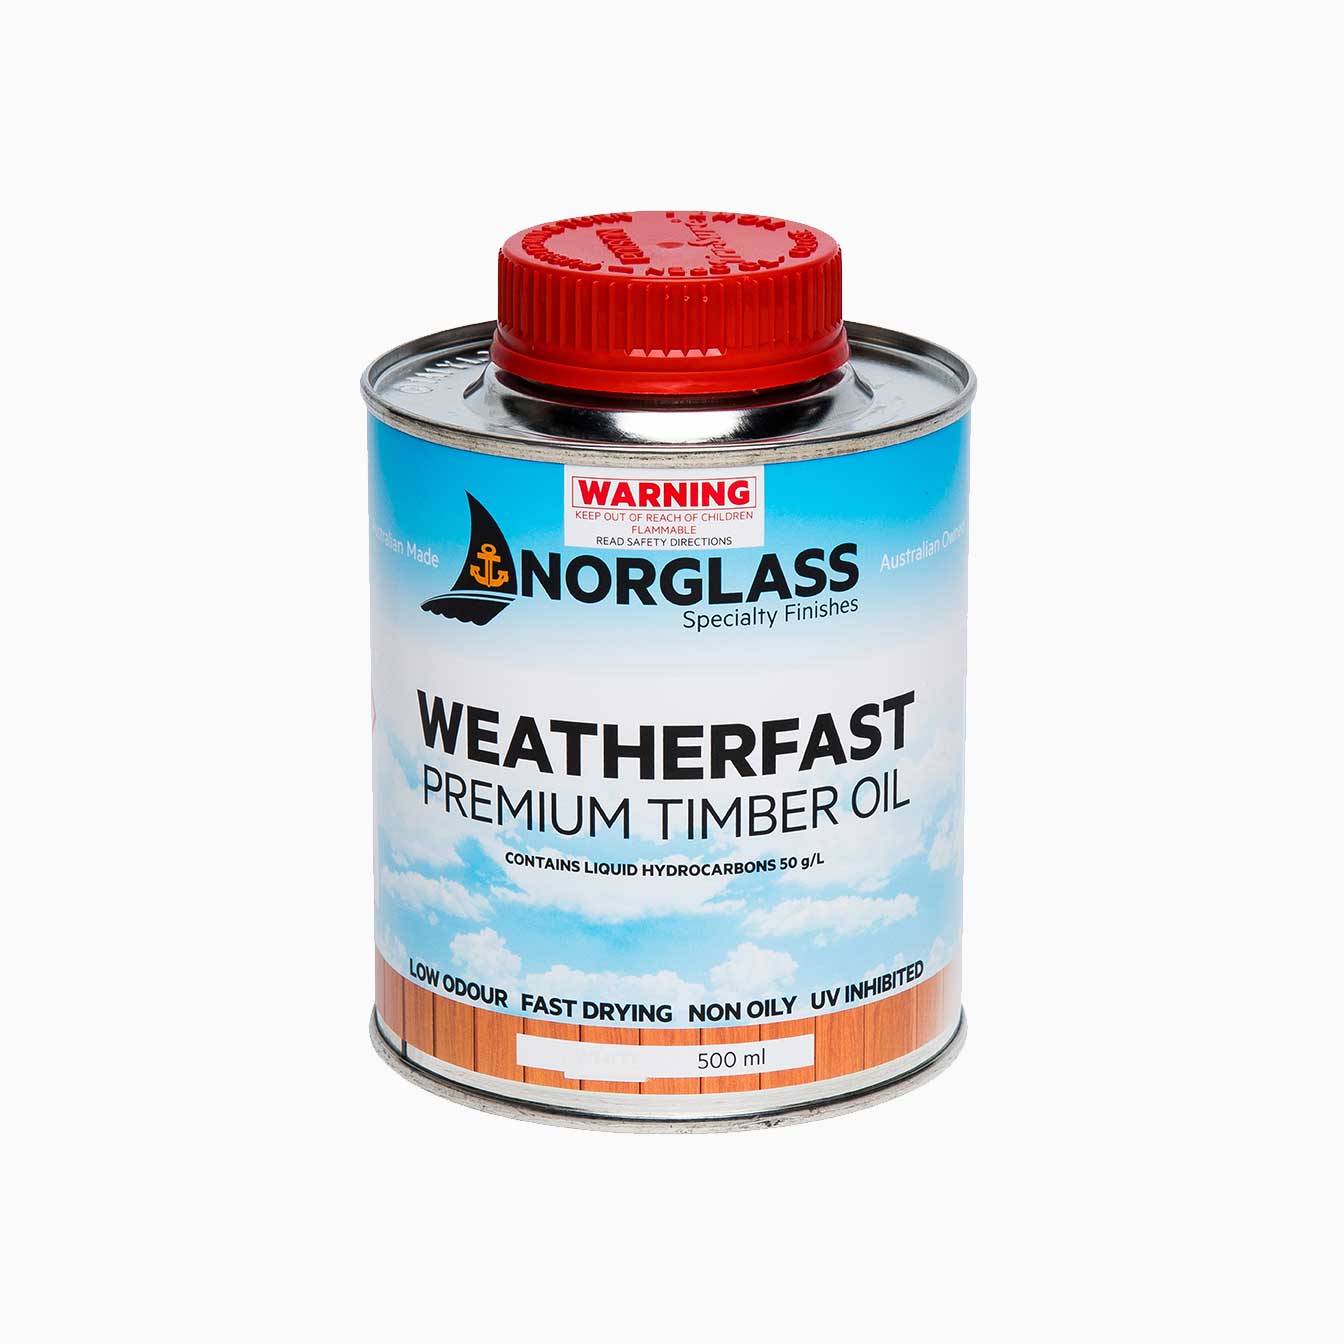 Weatherfast Premium Timber Oil